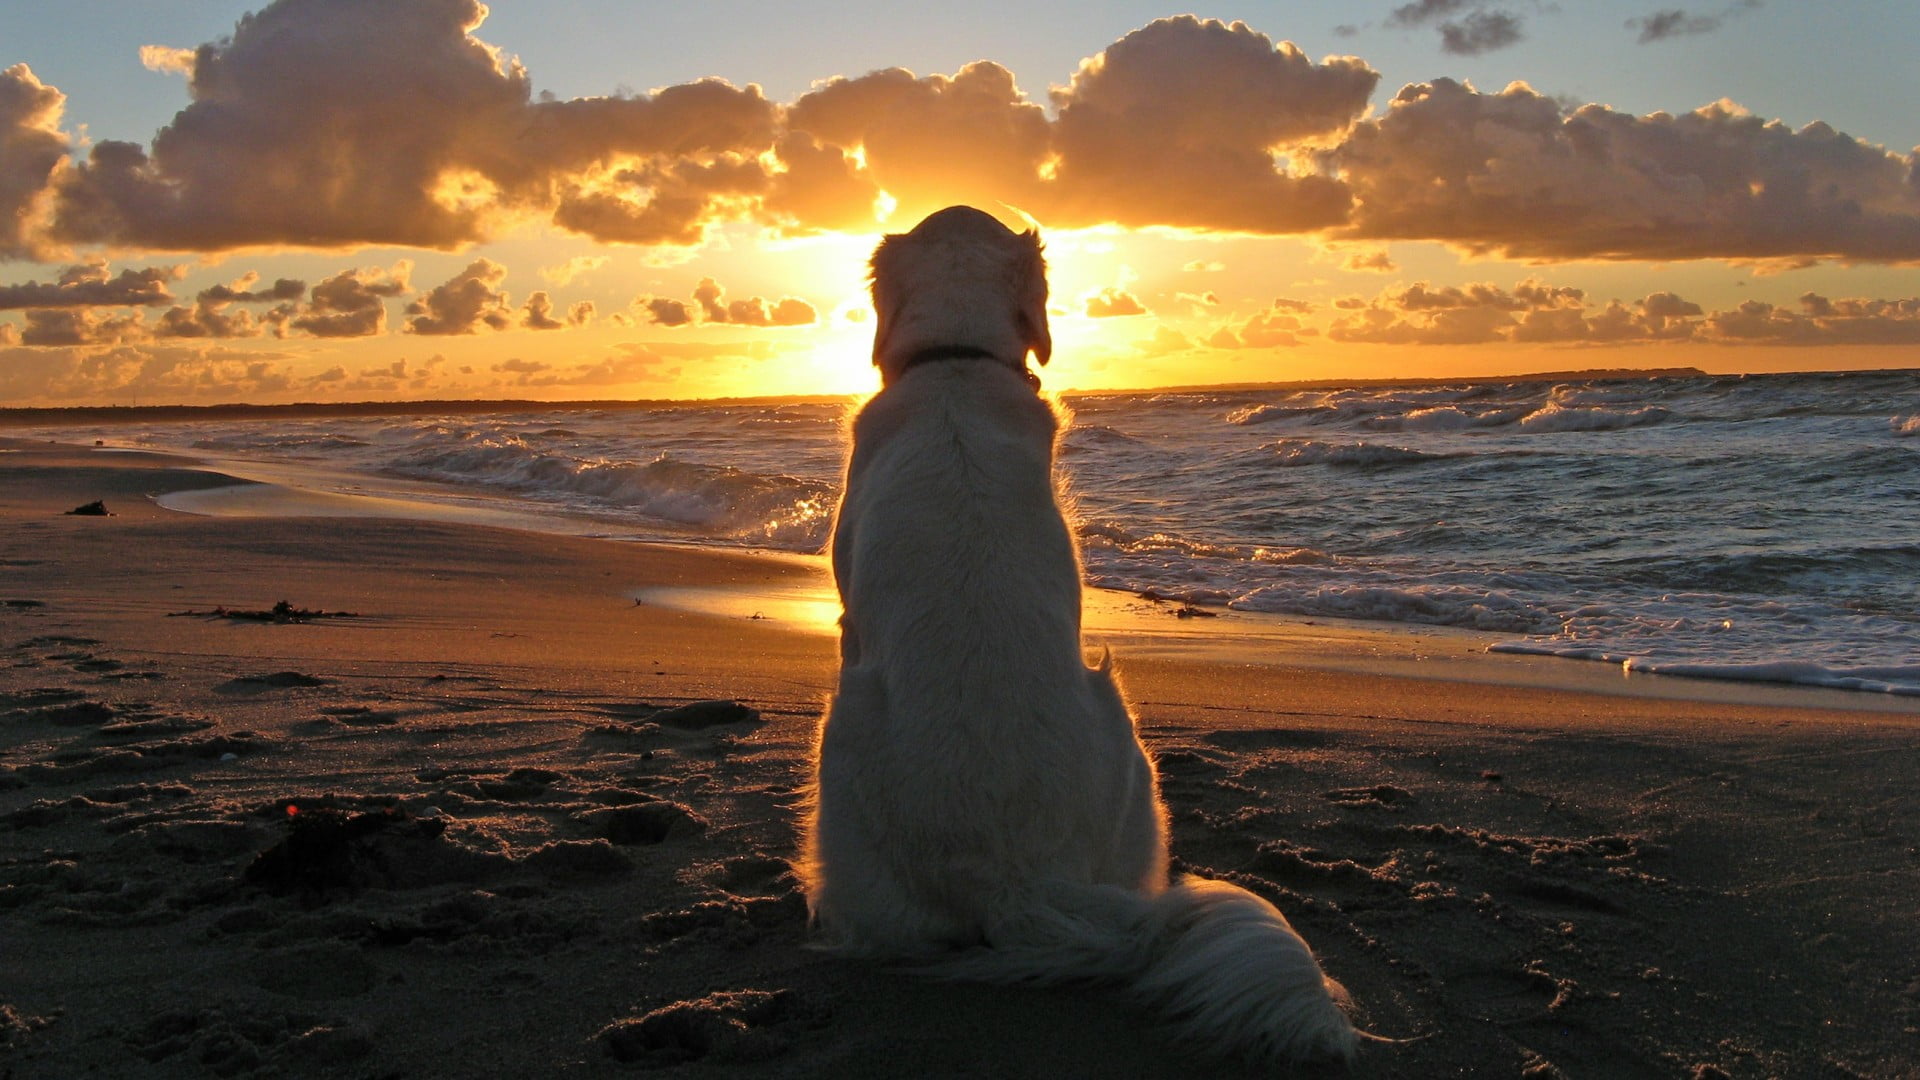 adult yellow Labrador retriever, dog, sunset, beach, waves, clouds